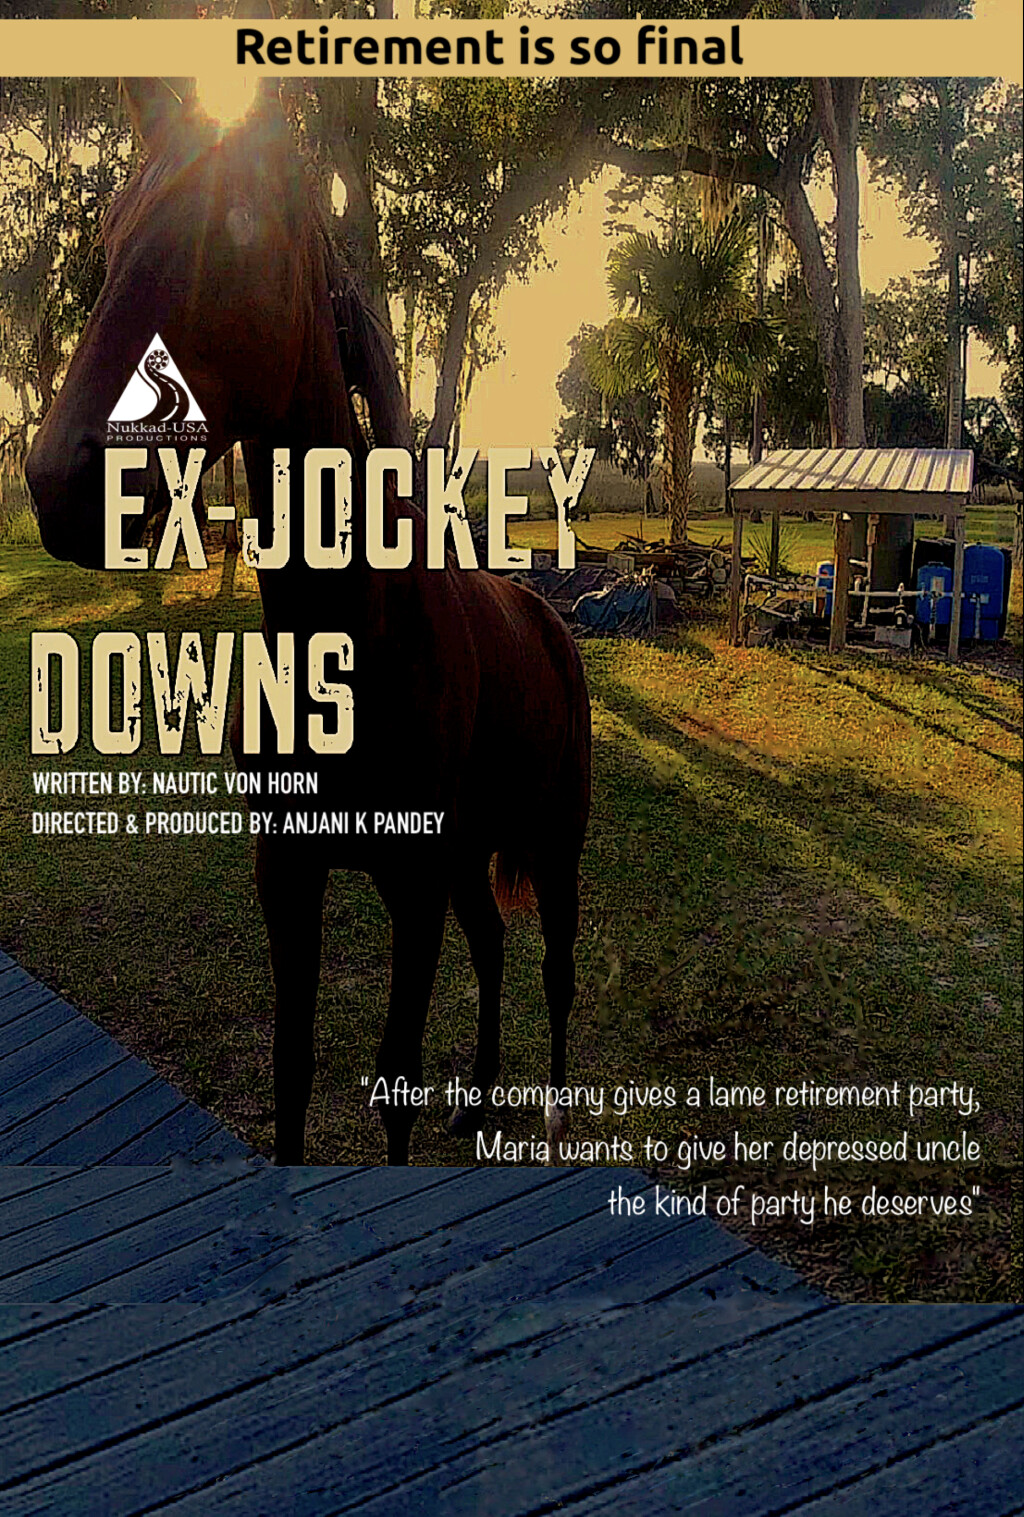 Filmposter for Ex-Jockey Downs